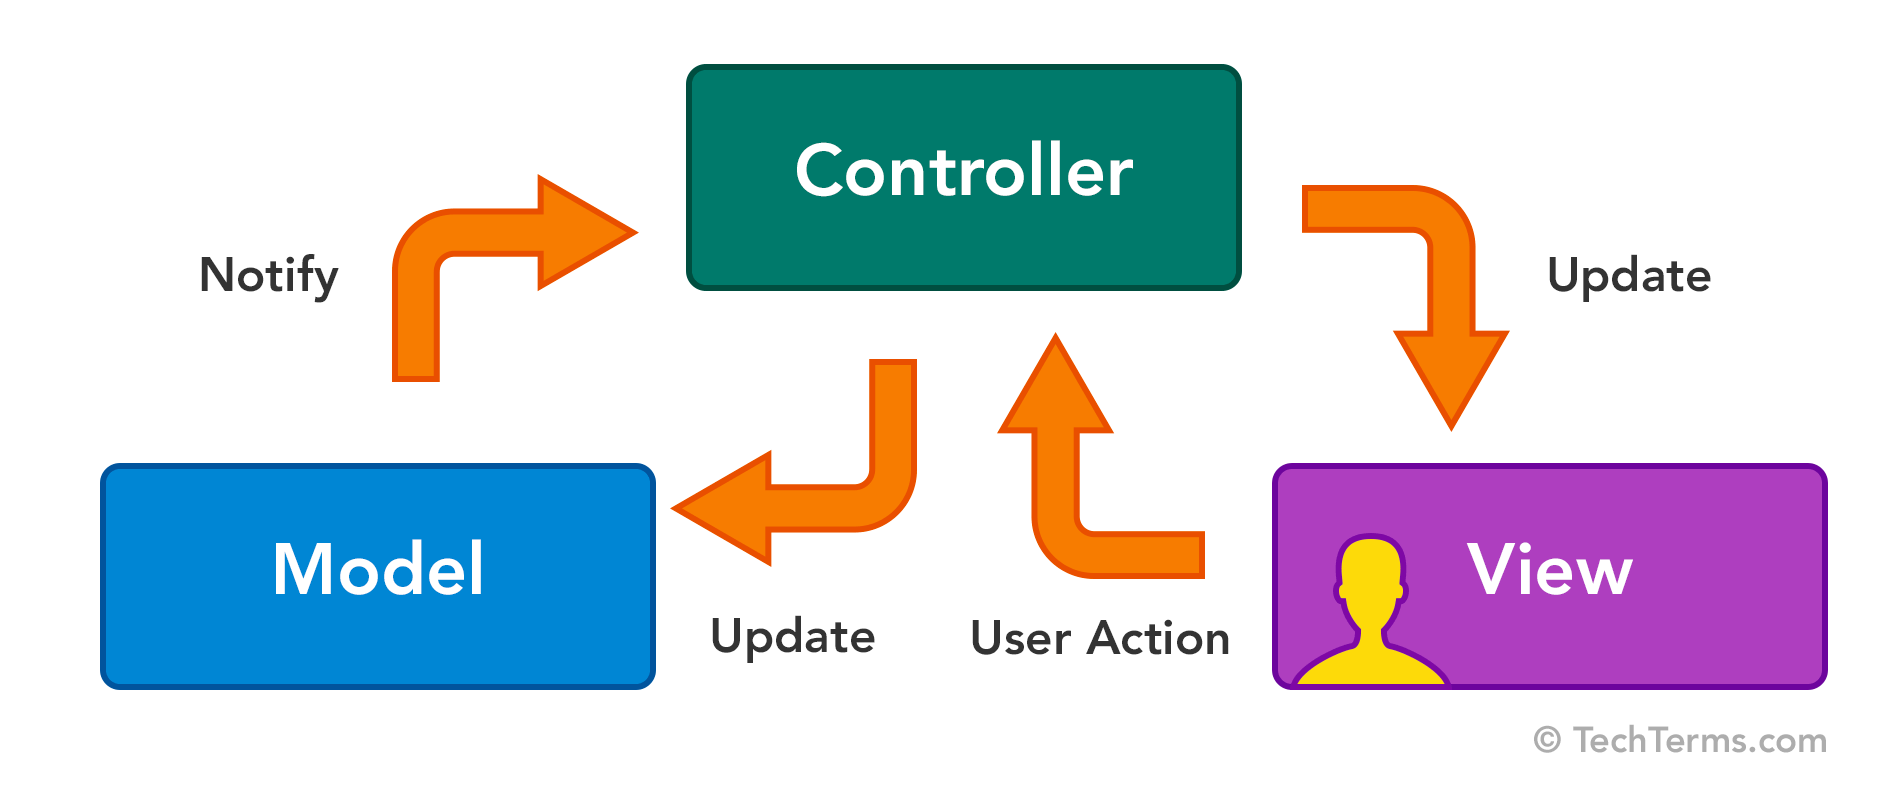 MVC (Model-View-Controller) Definition